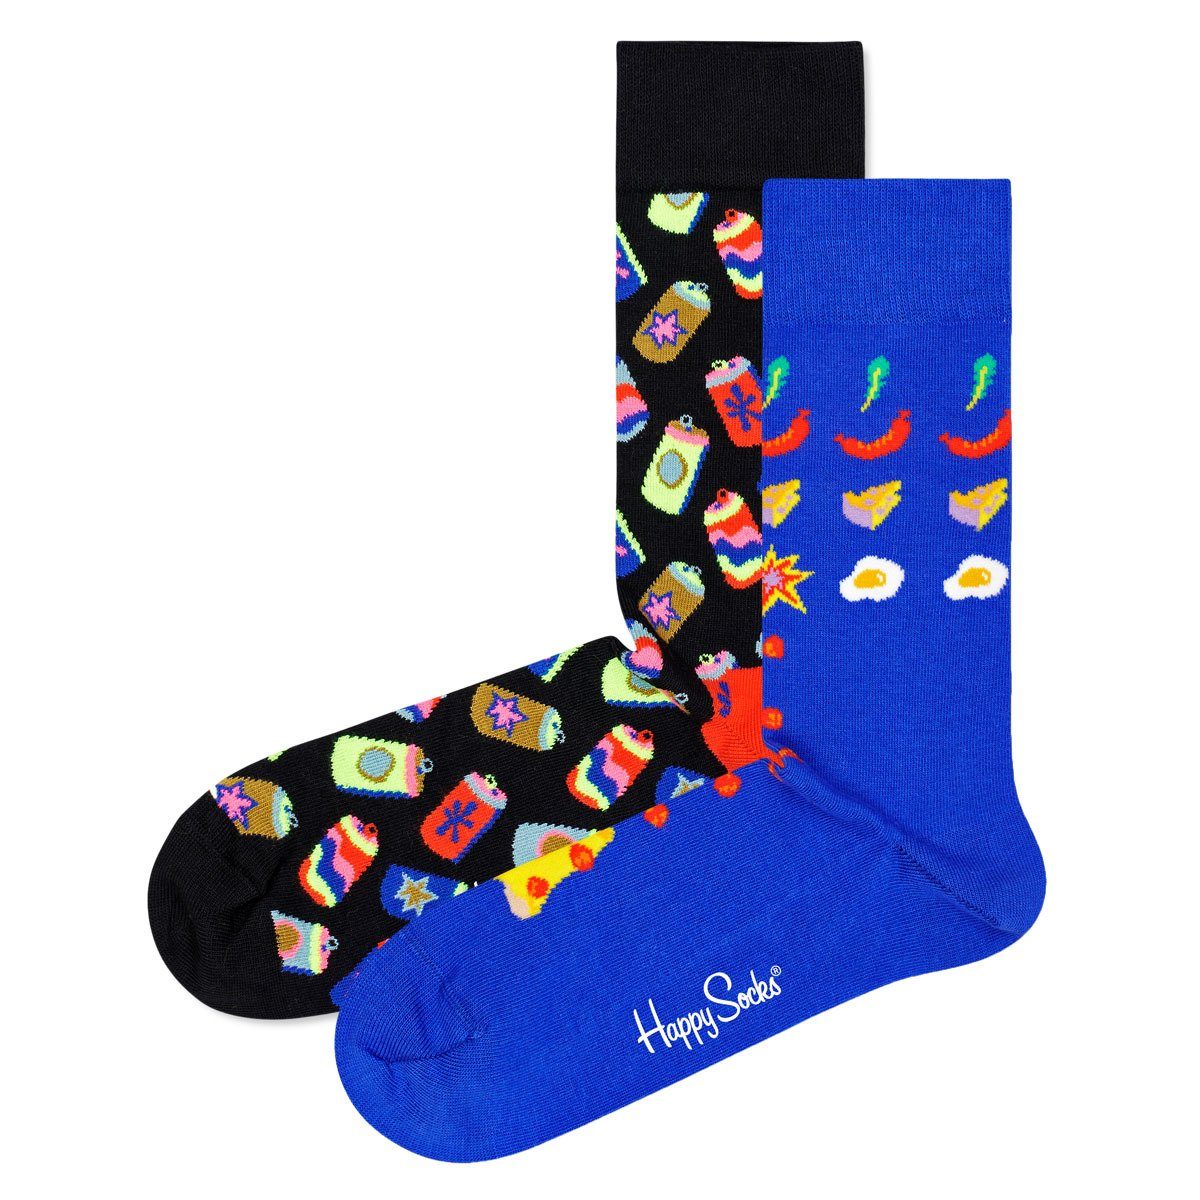 Socken, Unisex 2er Geschenkbox, Kurzsocken Night Socks Friday Pack Happy - Farbmix